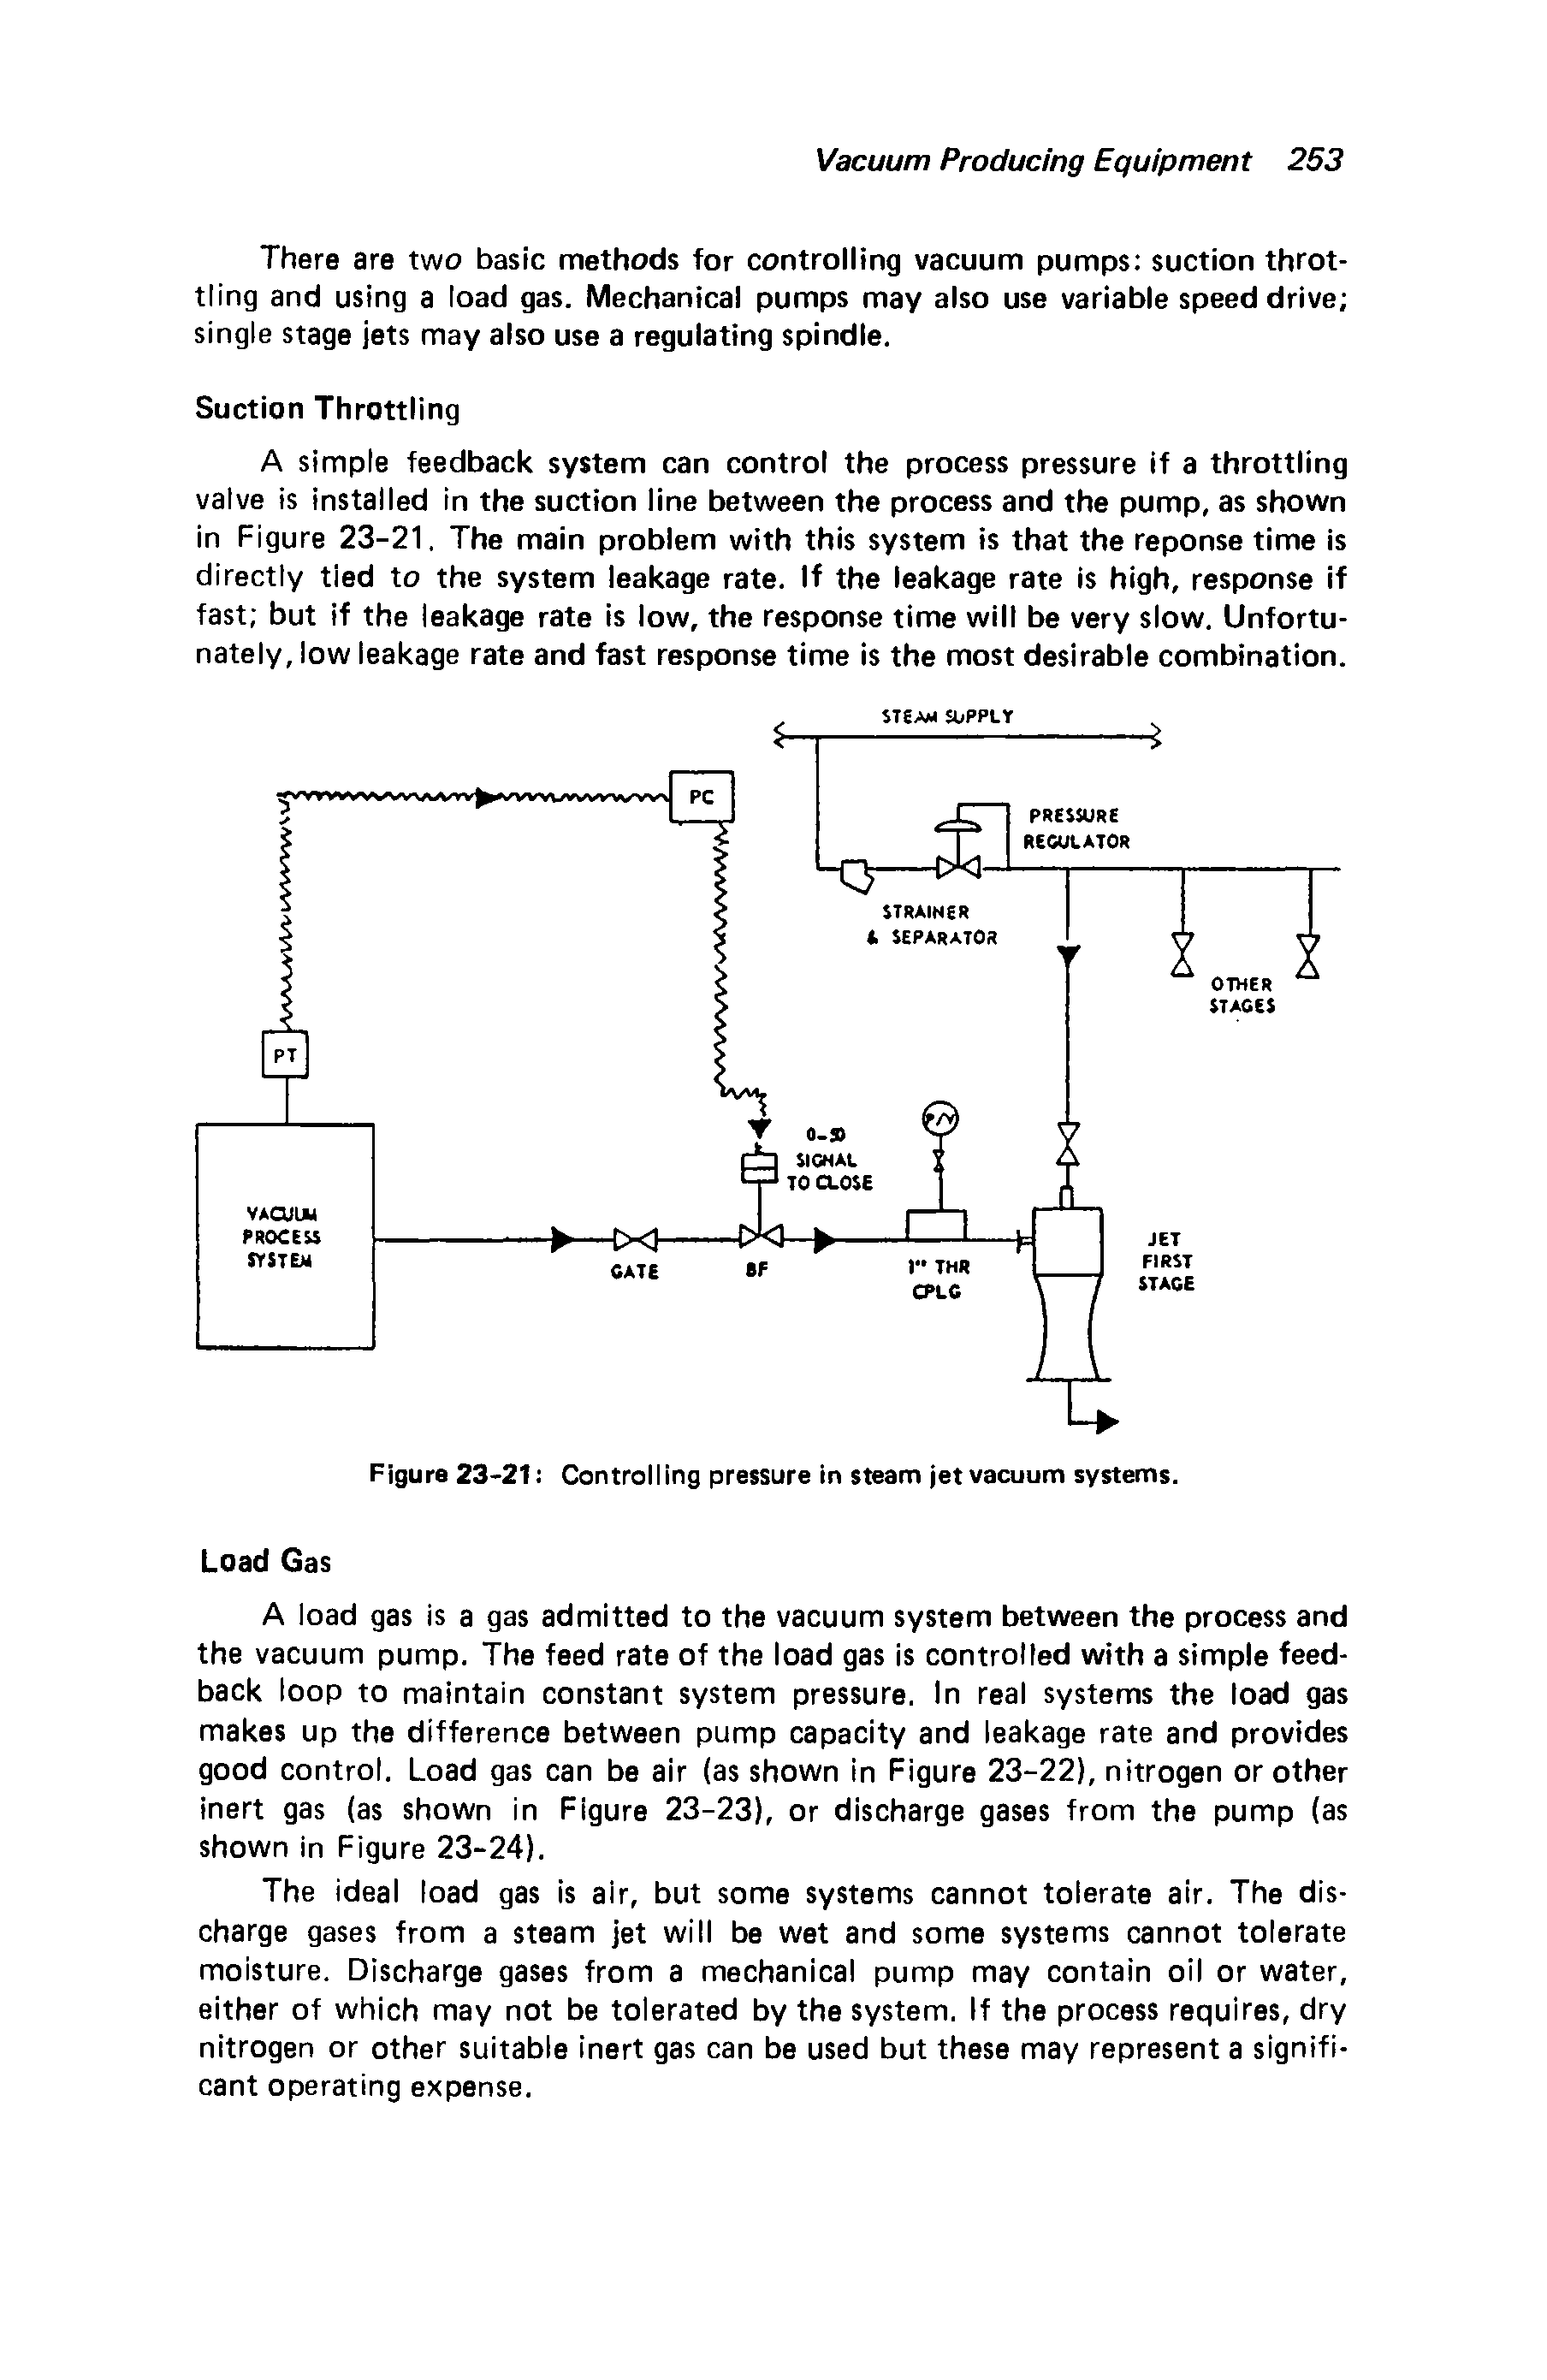 Figure 23-21 Controlling pressure in steam jet vacuum systems.